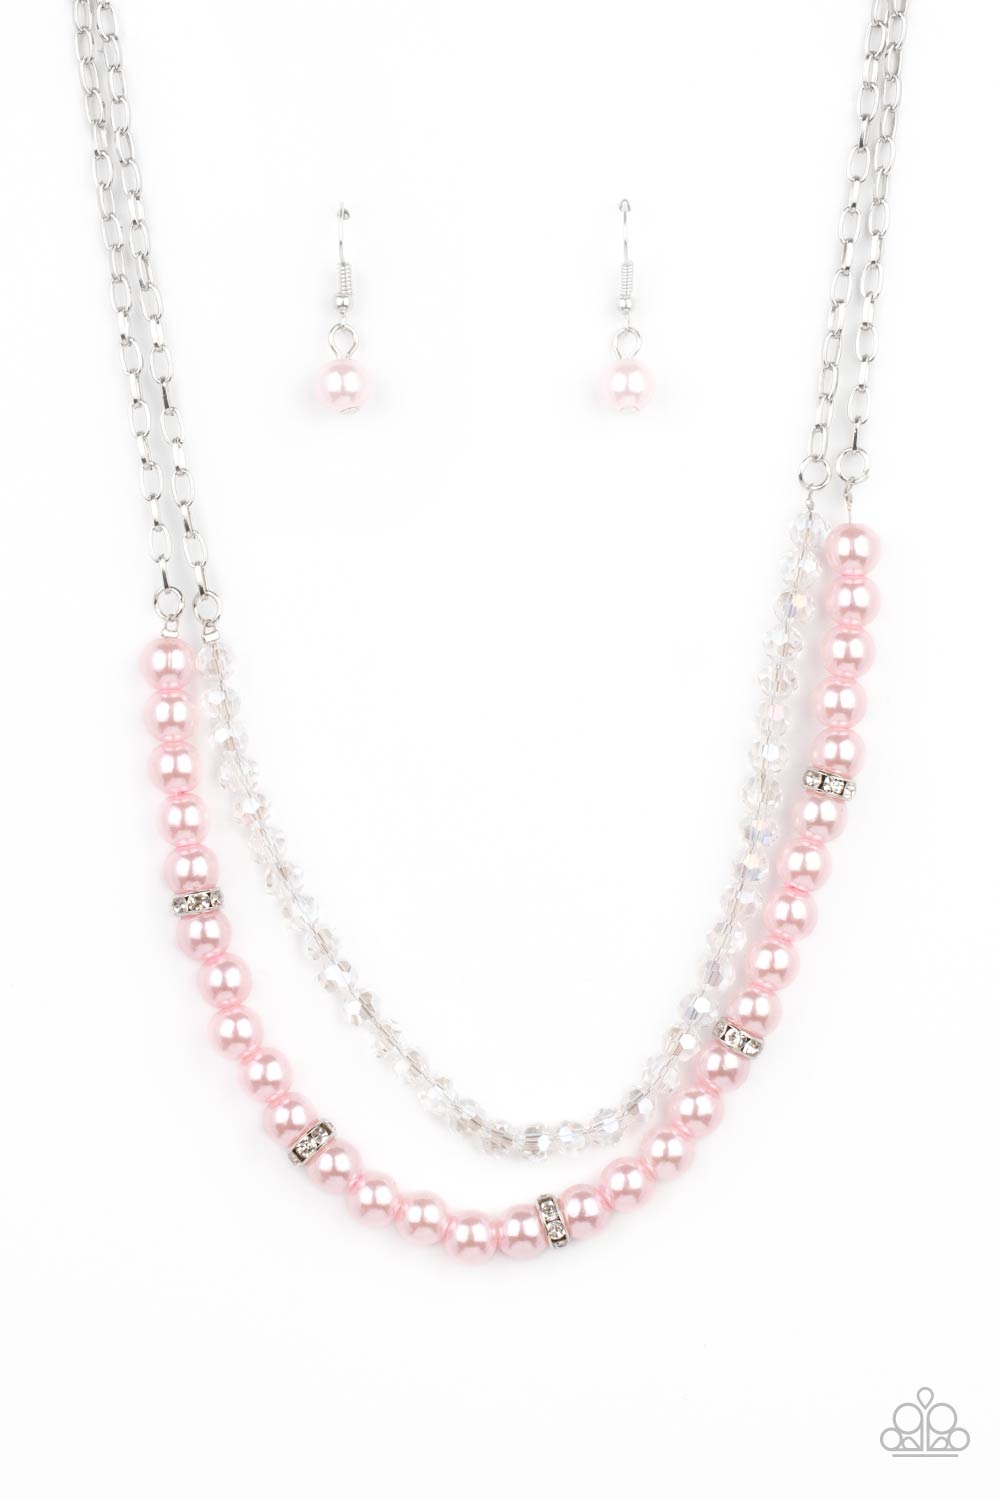 Parisian Princess - Pink pearl necklace